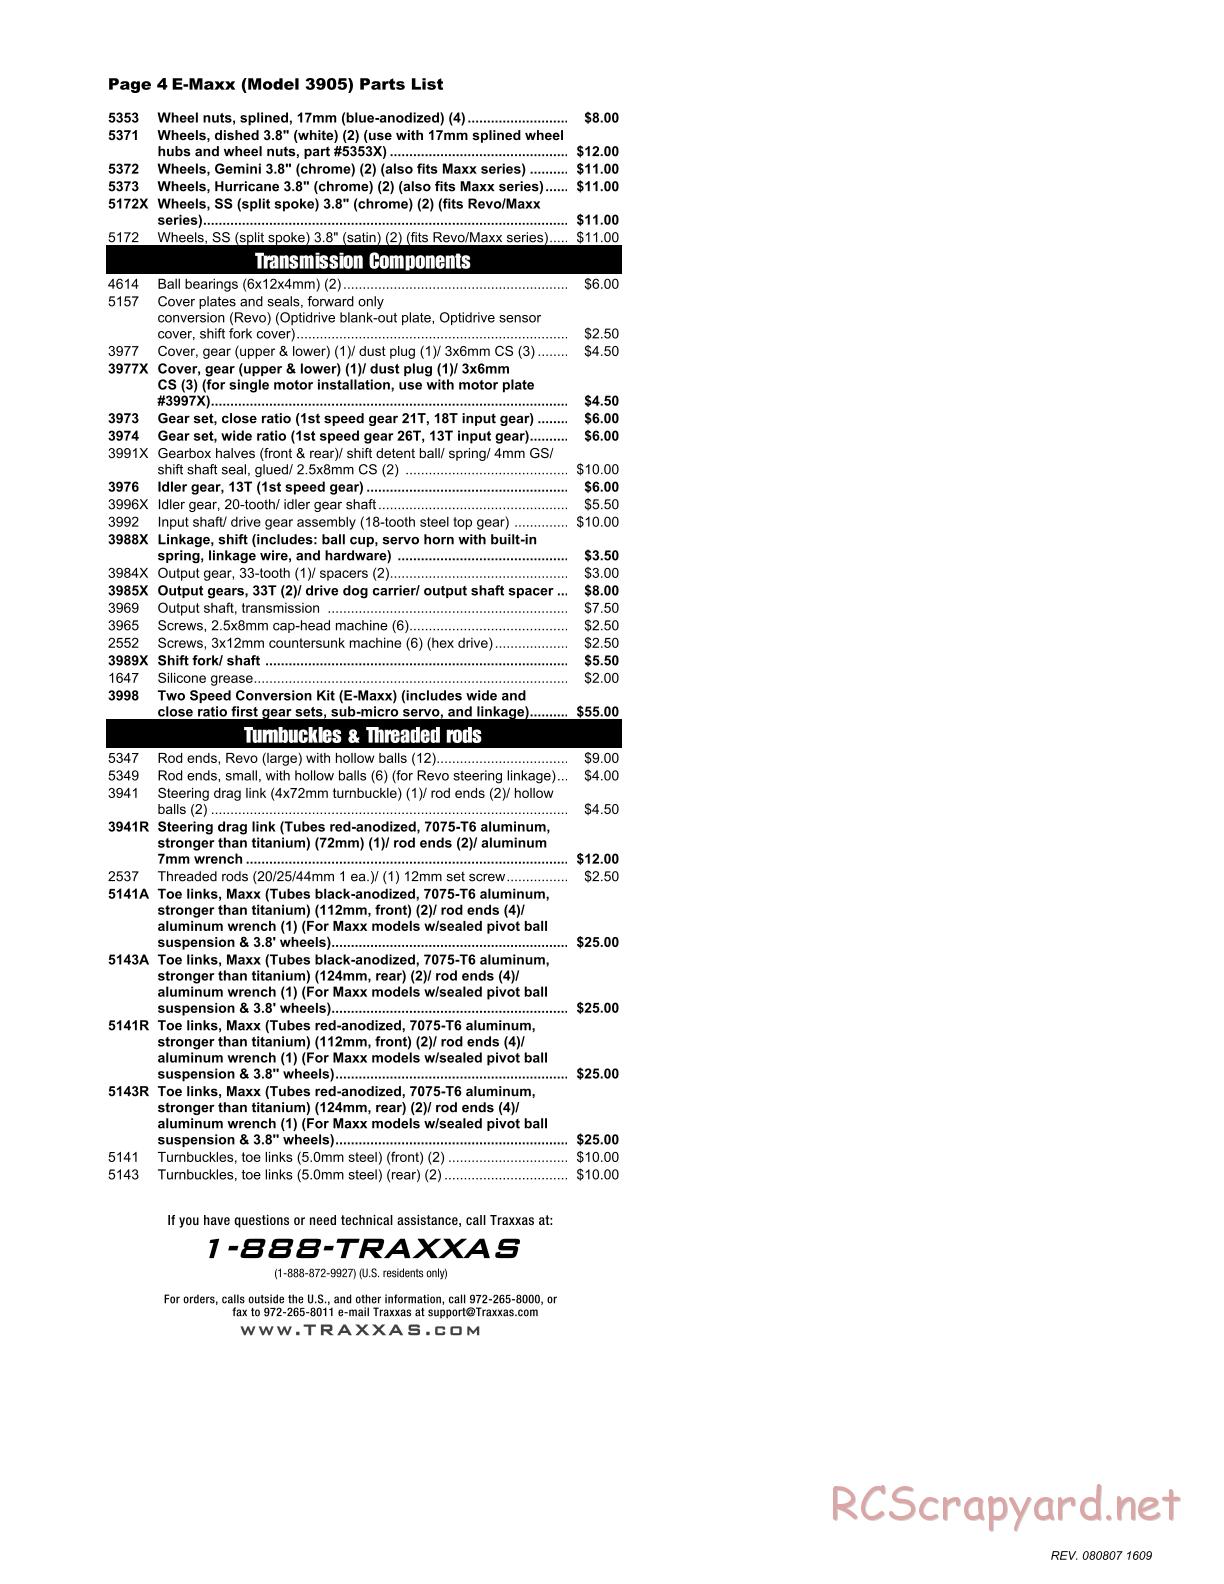 Traxxas - E-Maxx (2007) - Parts List - Page 4